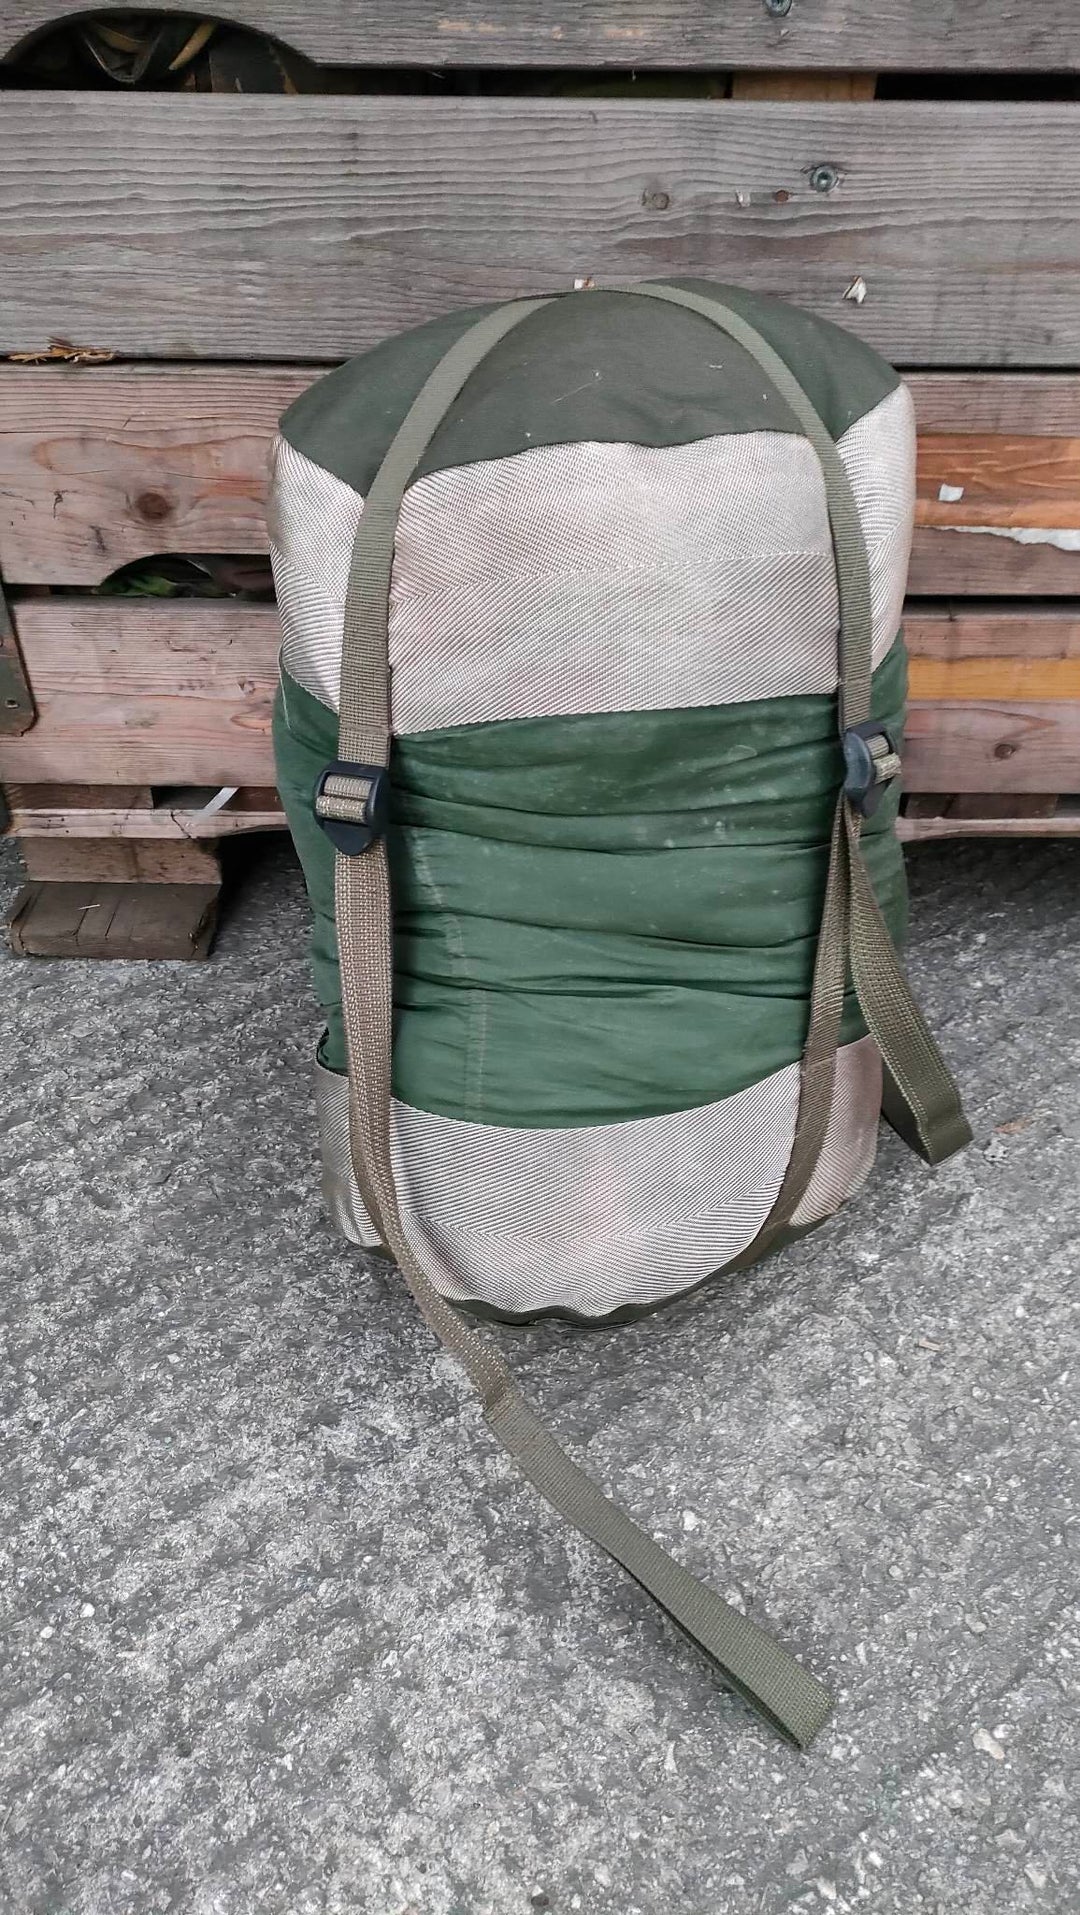 Dutch Air Force M90 Sleeping Bag with Stuff Sack